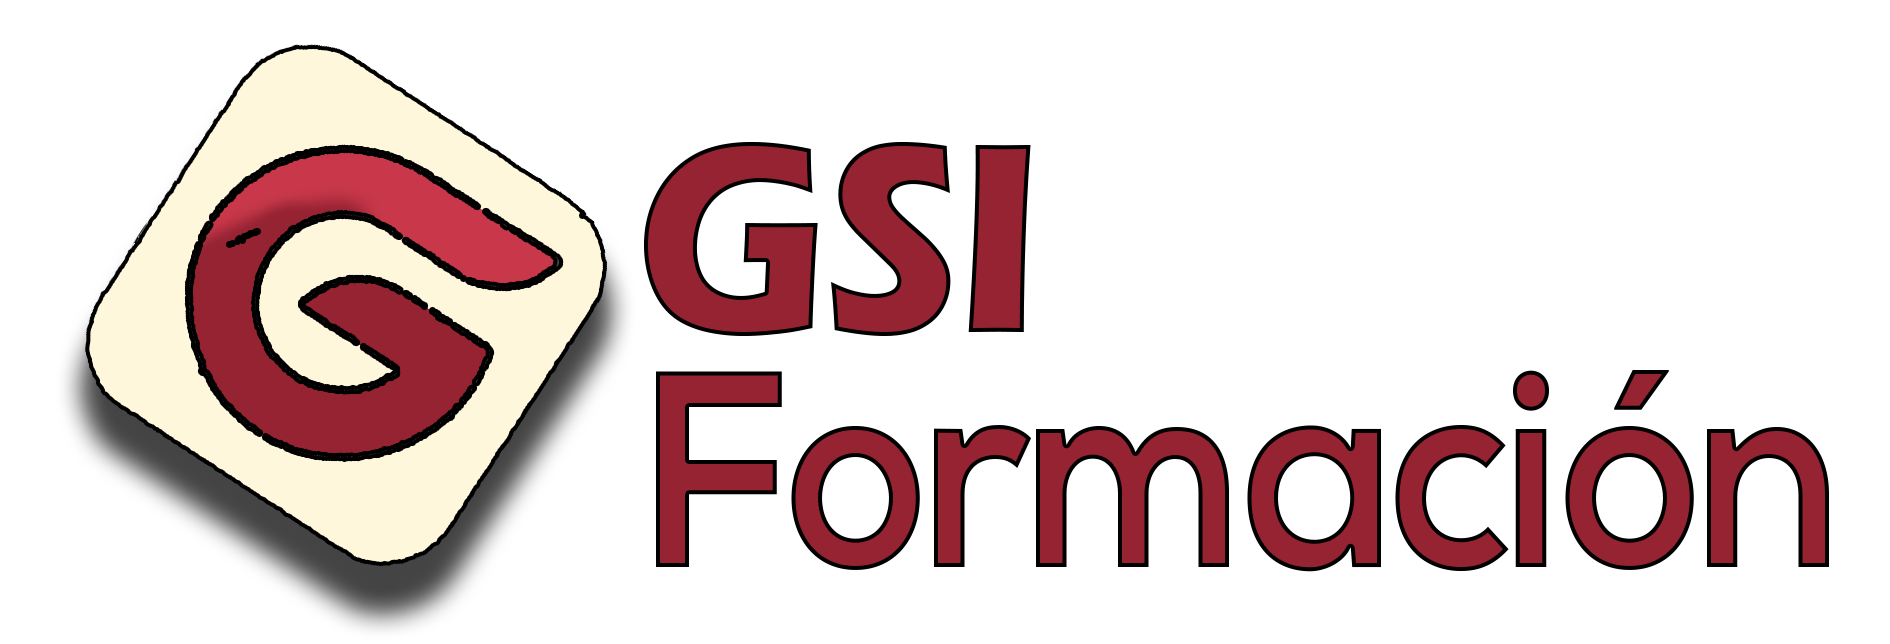 GSI FORMACION - CURSOS ONLINE